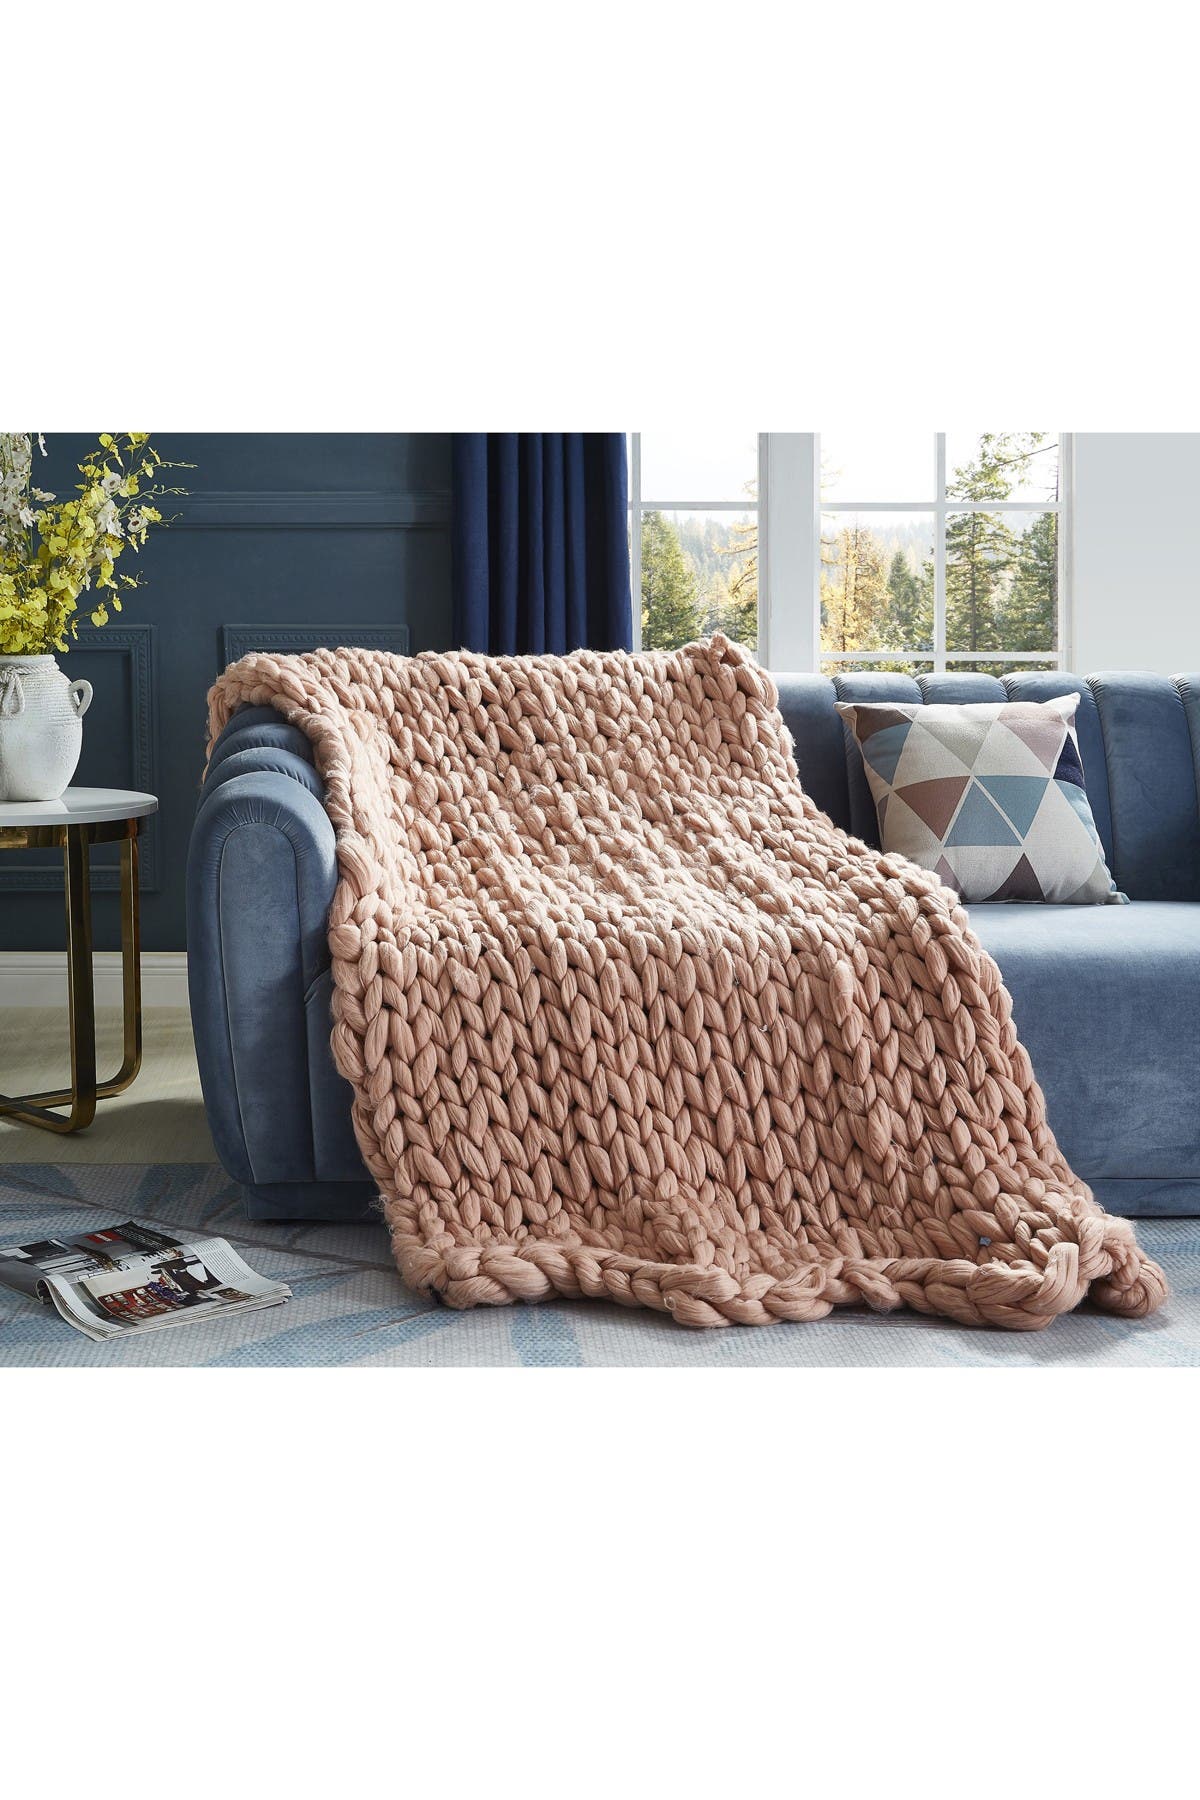 Inspired Home Cozy Tyme Mantisa Chunky Knit Throw 40 X 60 Blush Nordstrom Rack